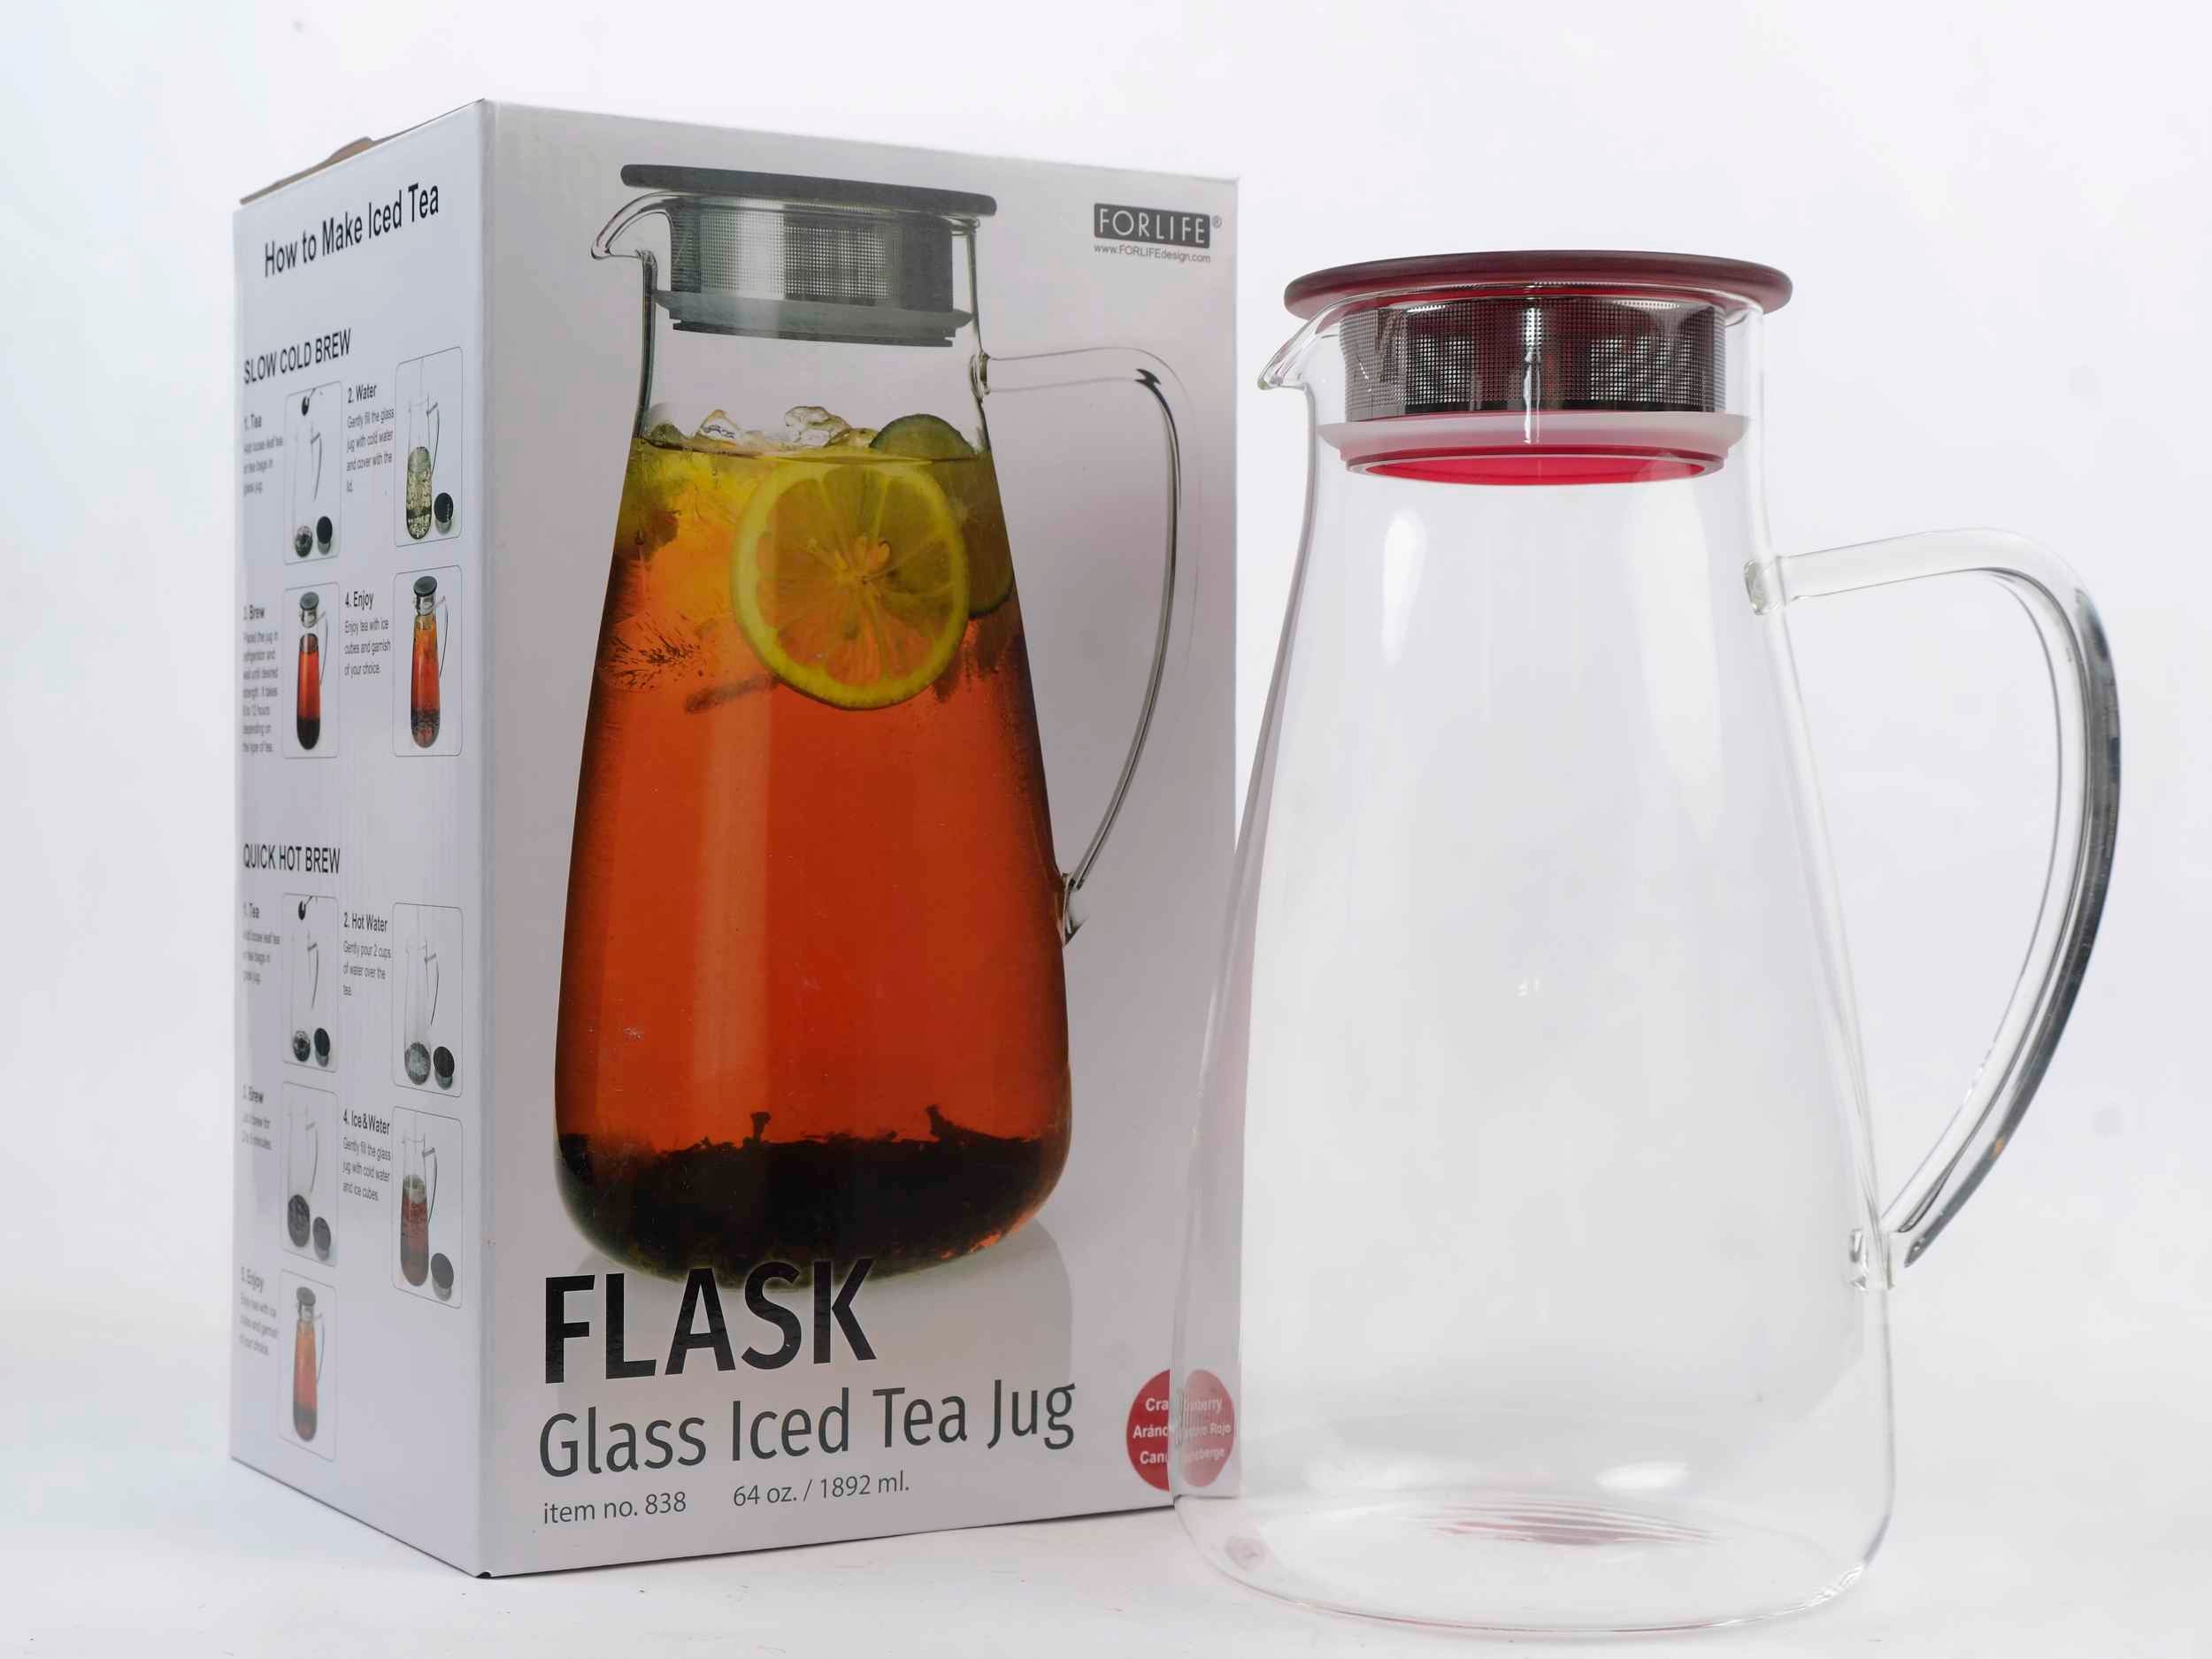 FORLIFE Flask Glass Iced Tea Jug 64 oz.